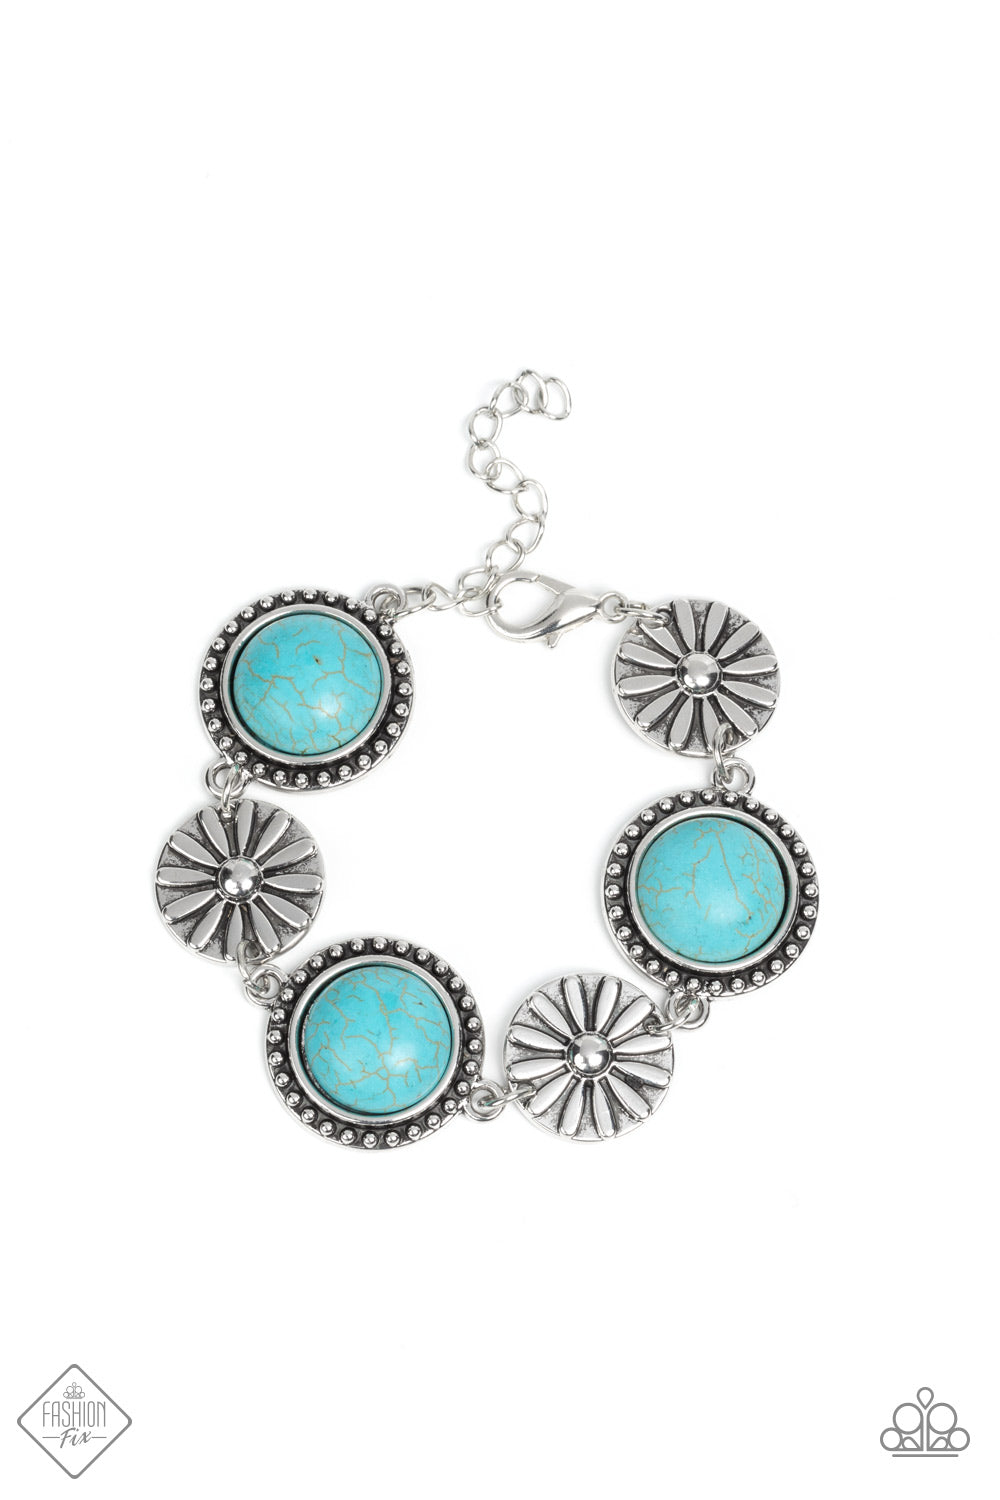 Blue Tika Flower Bracelet – Love Stylize